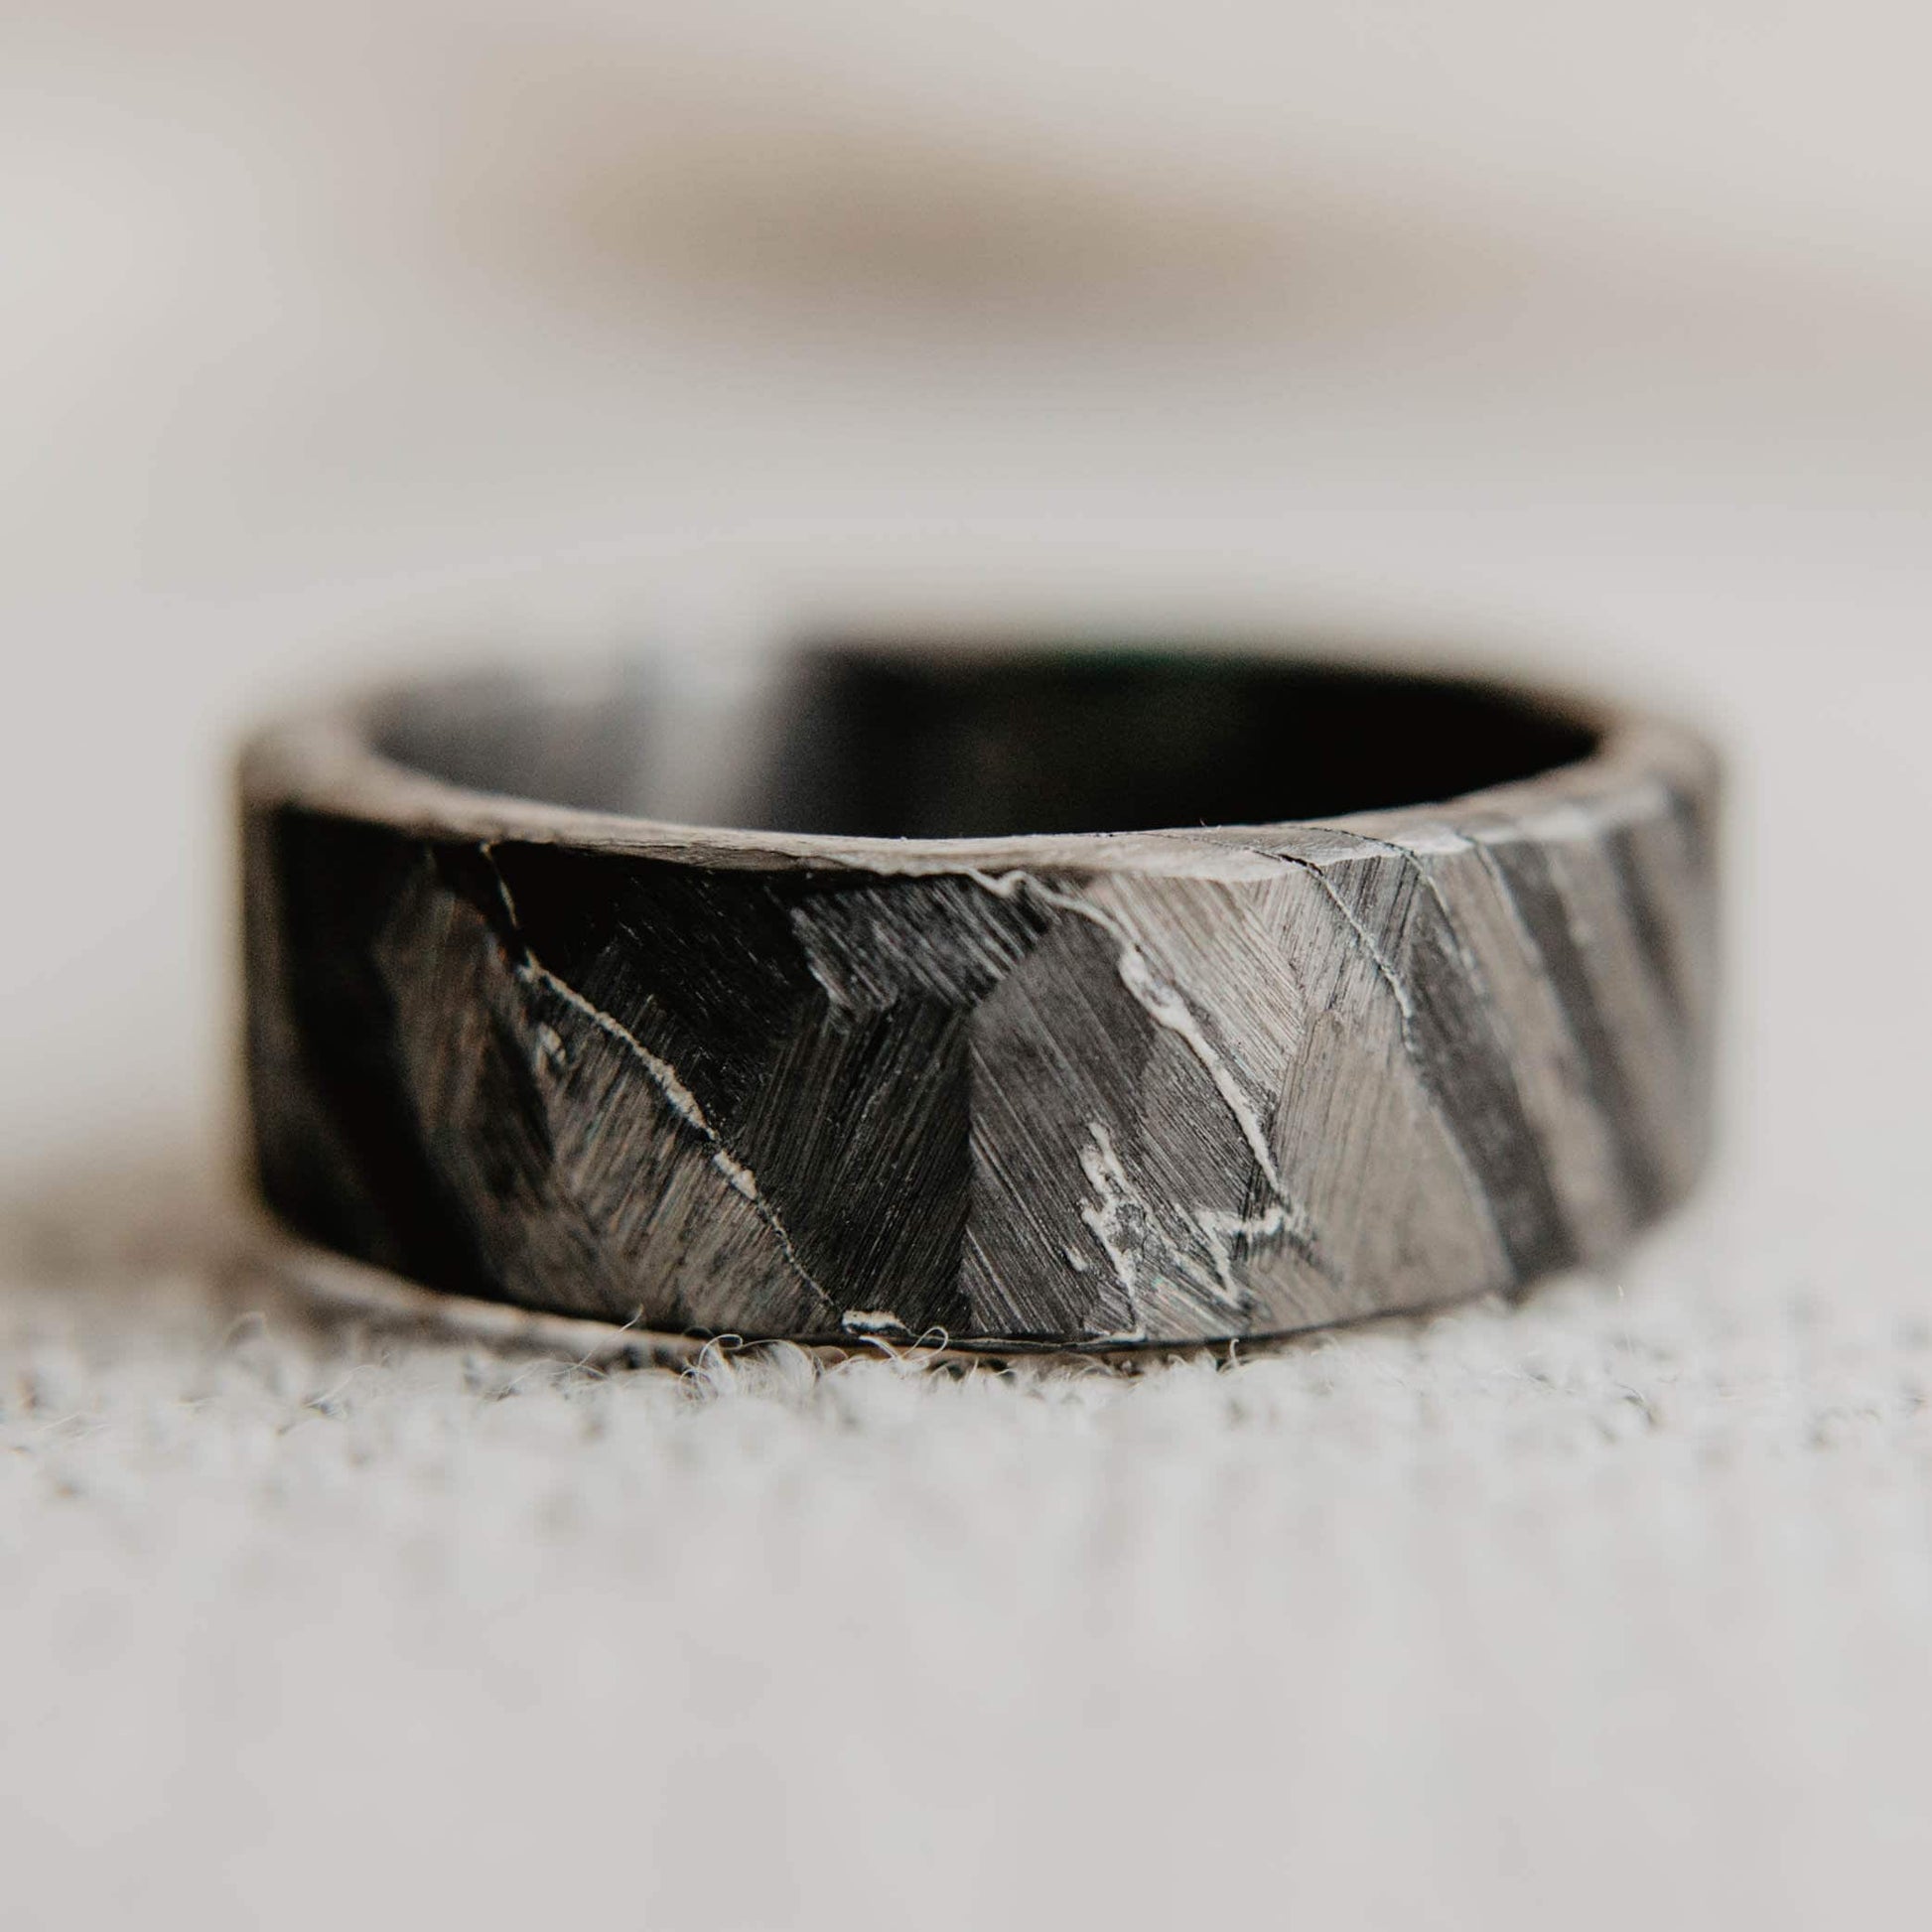 Distressed Black Zirconium and Titanium Damascus Wedding Band. Black and Gray Ring. (Horizontal with cloth background)